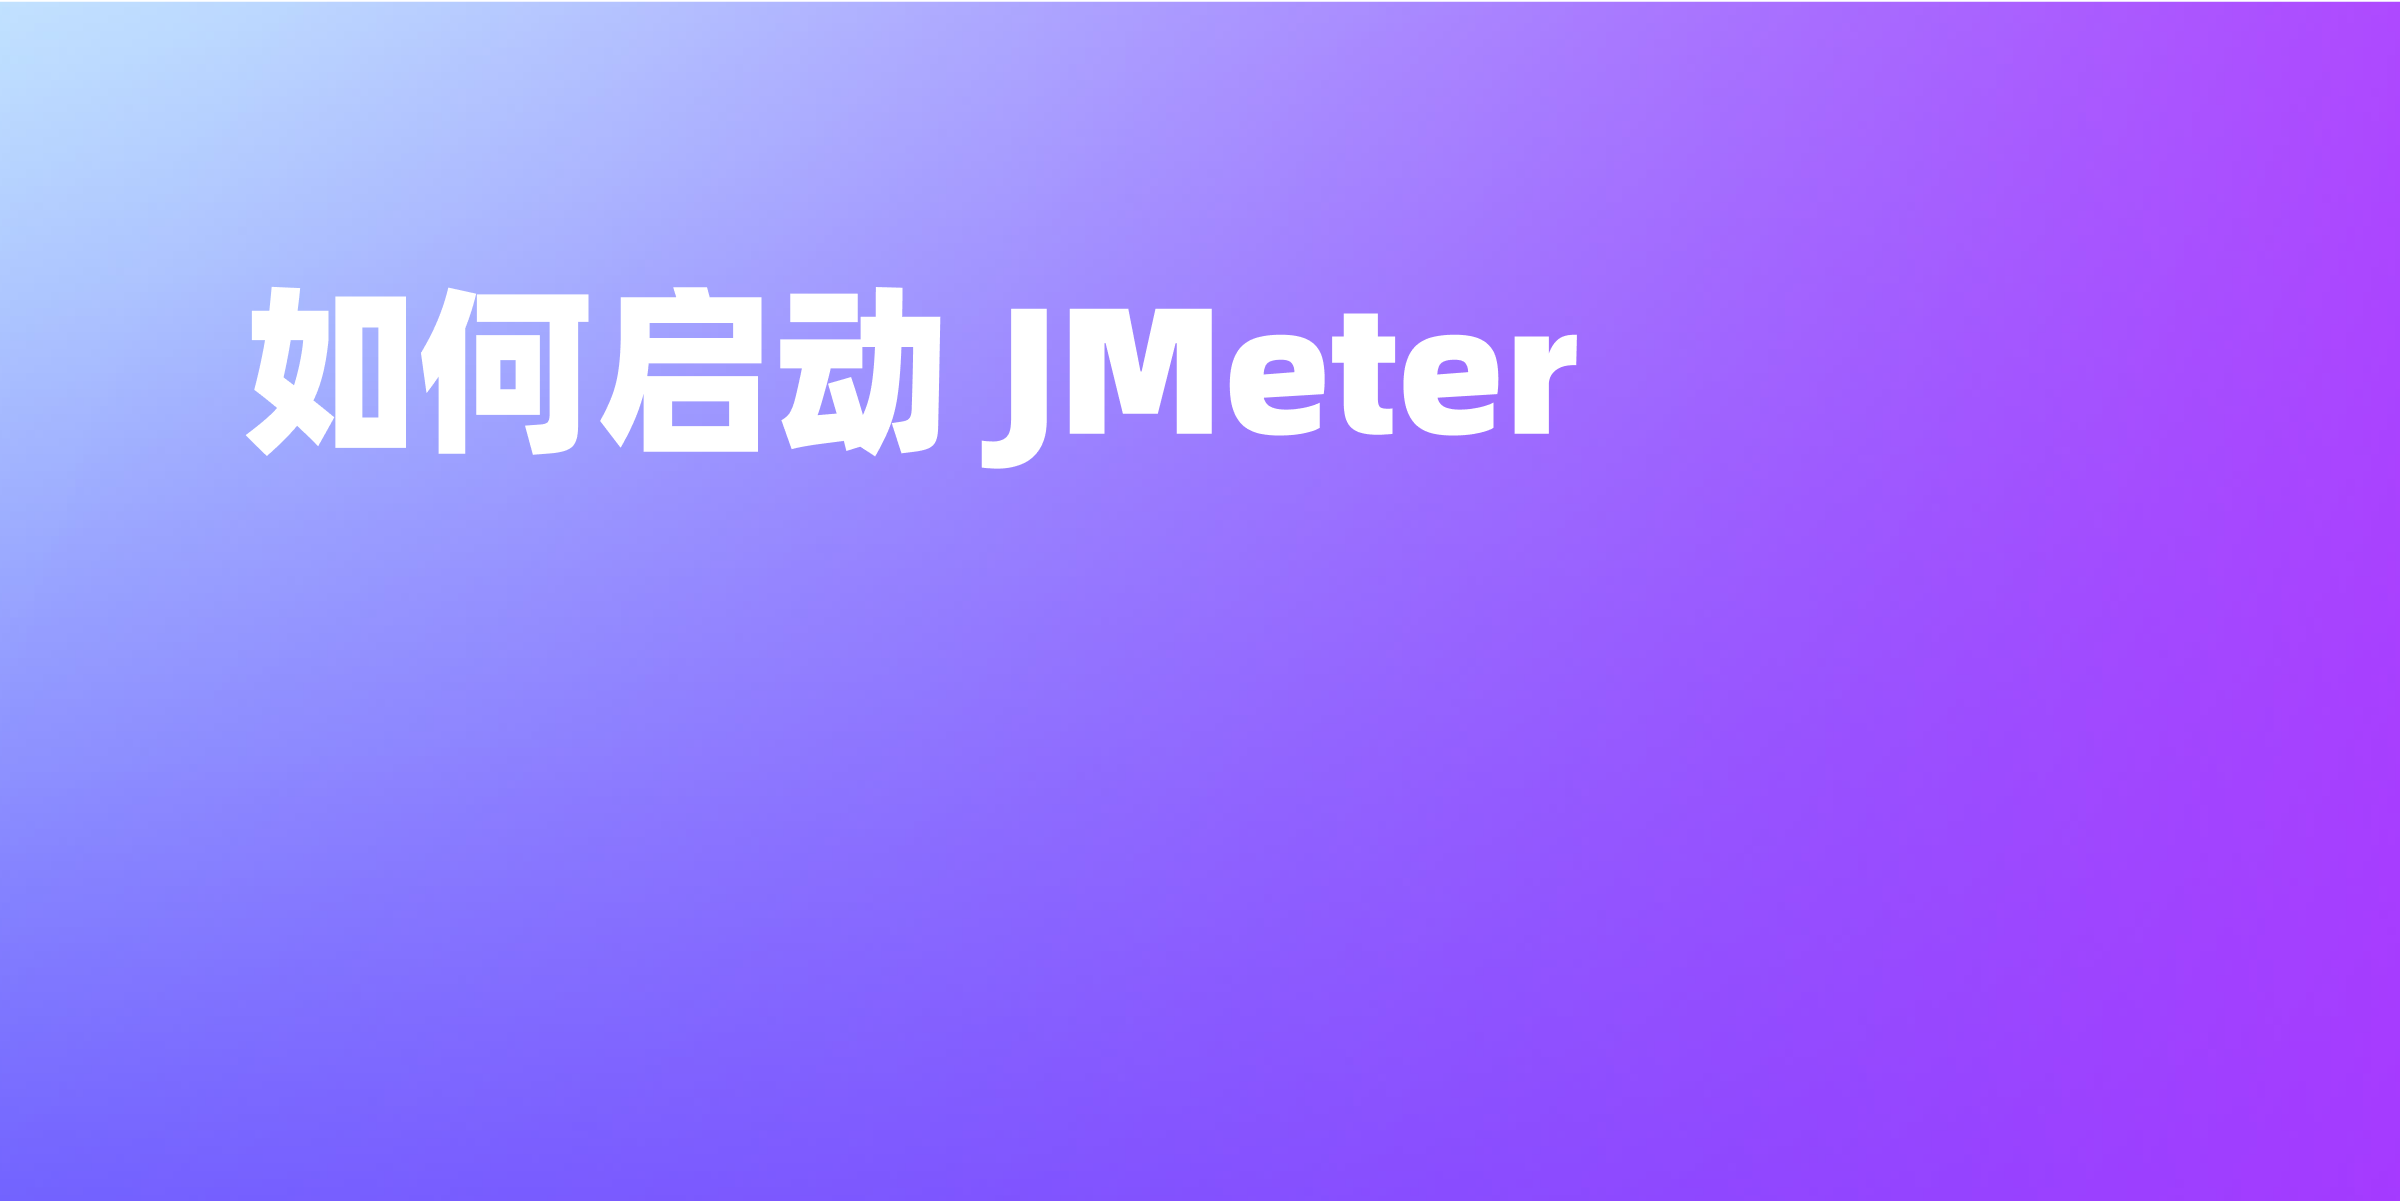 JMeter 快速入门指南：如何启动 JMeter